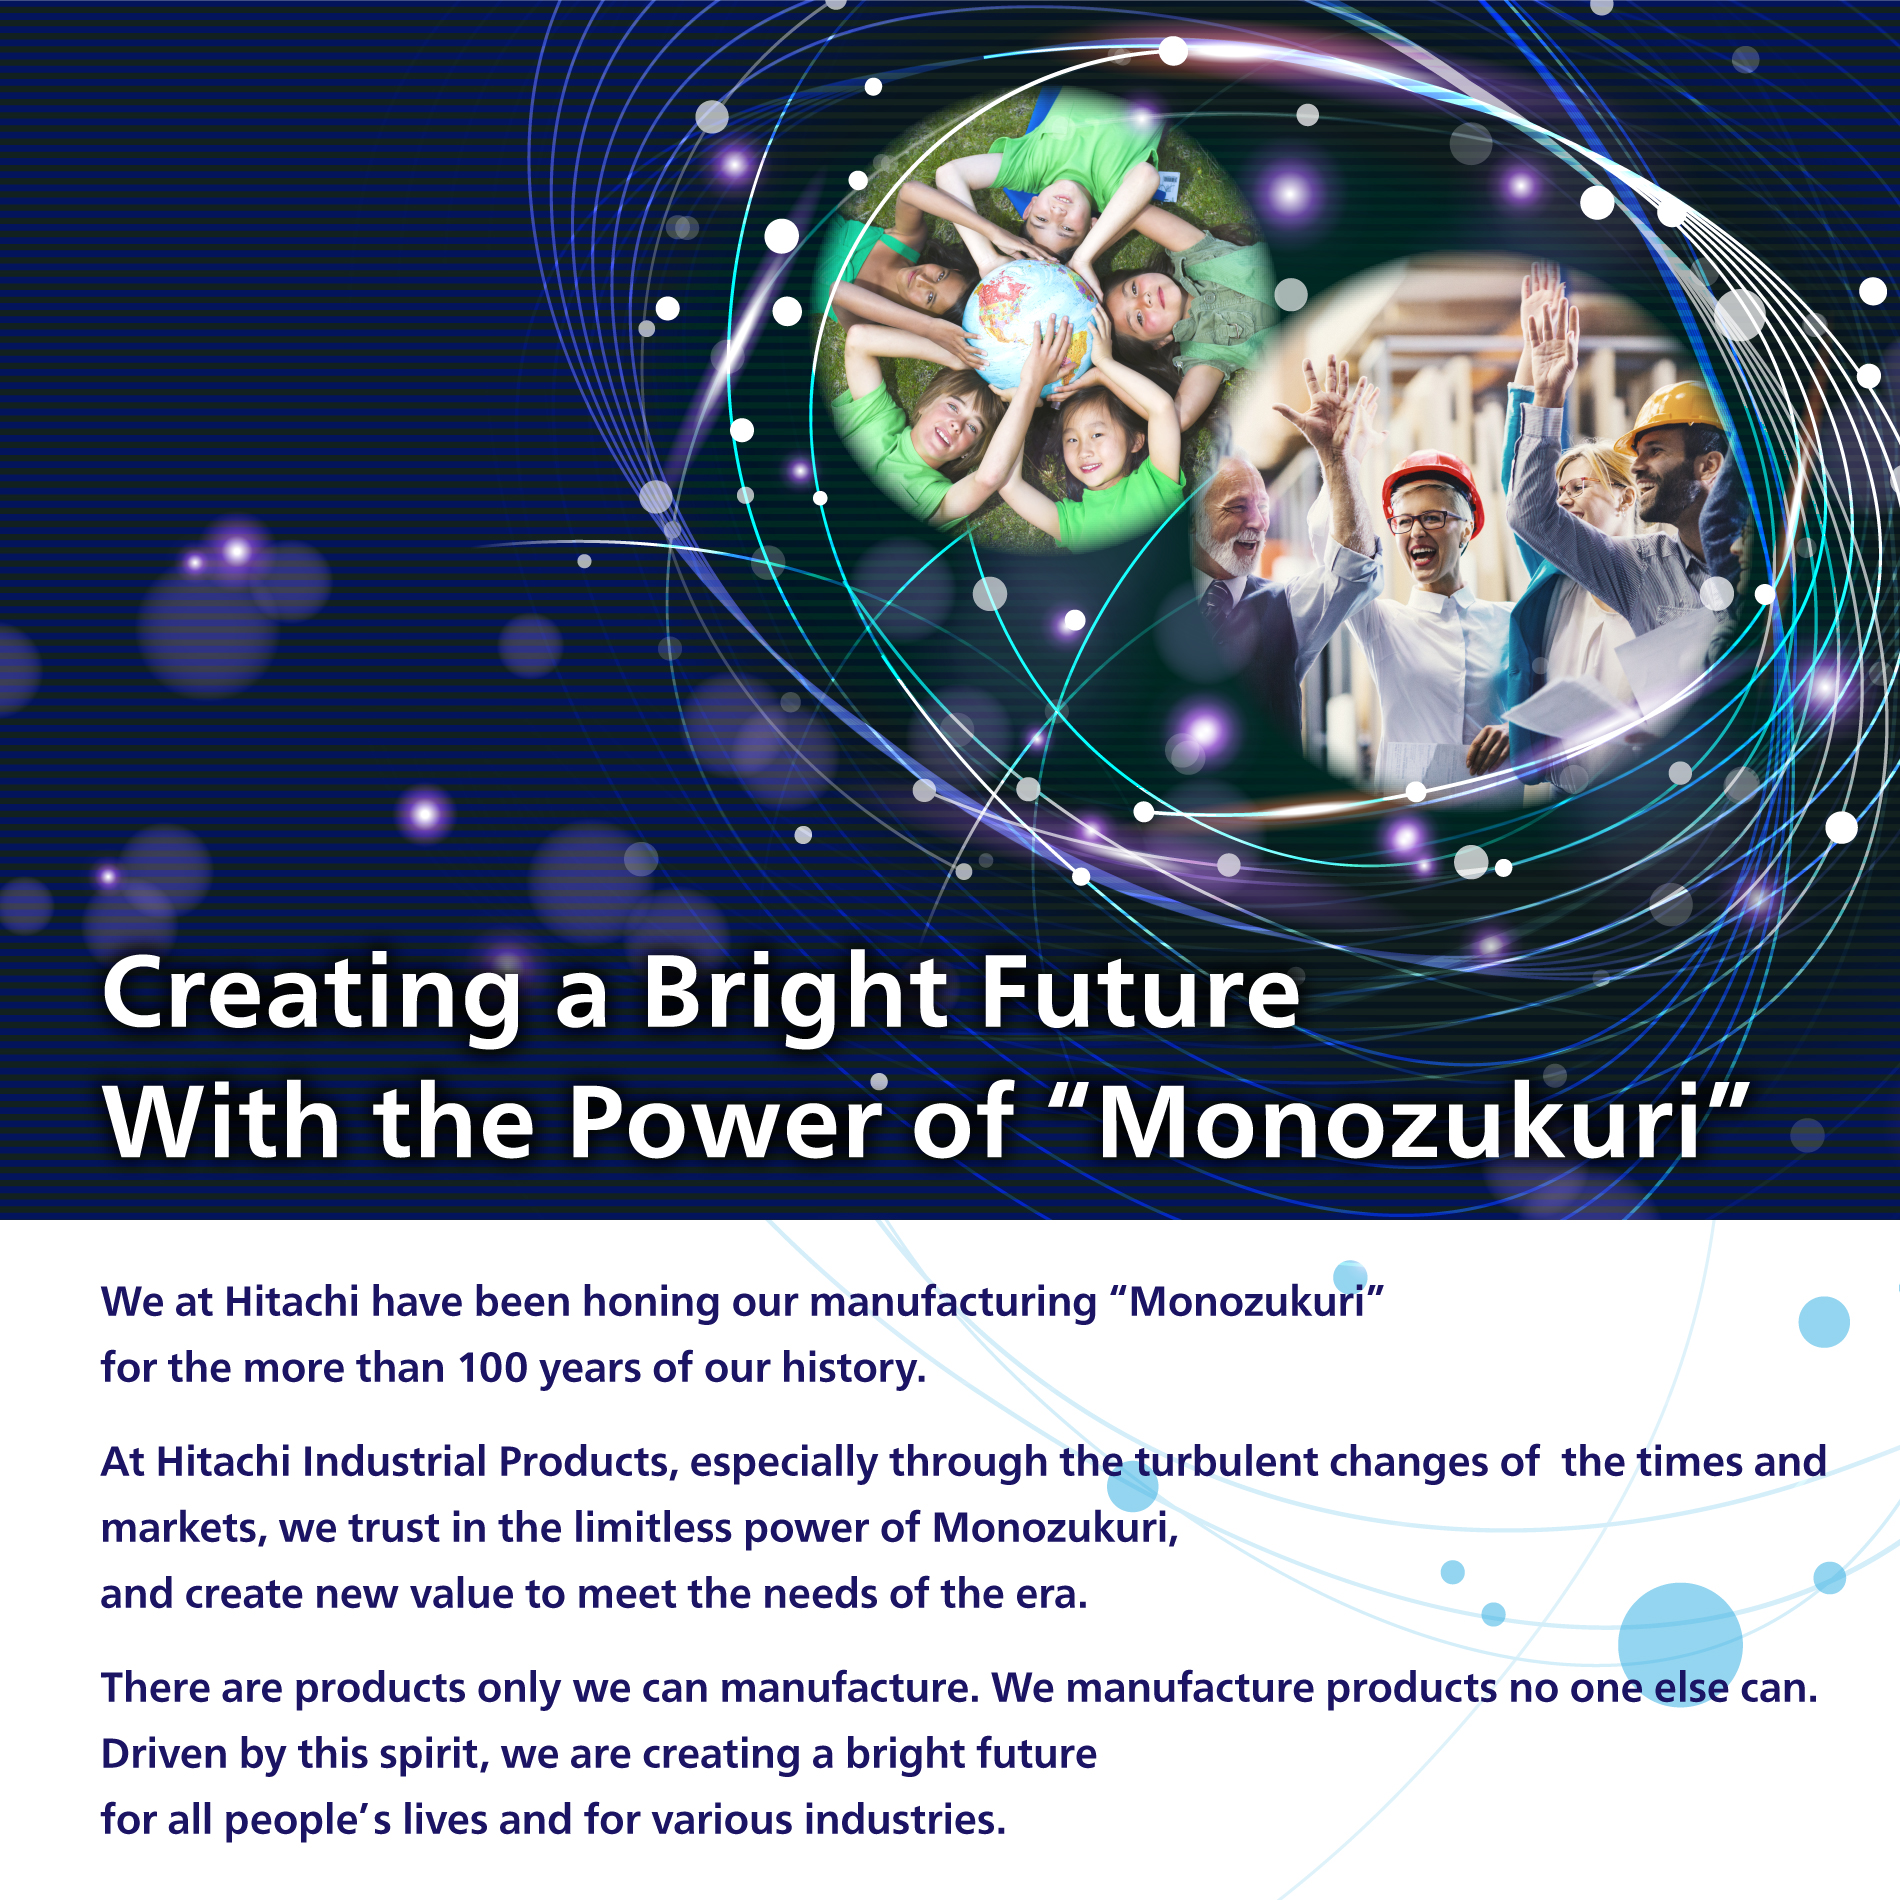 Creating a Bright Future With the Power of "Monozukuri"